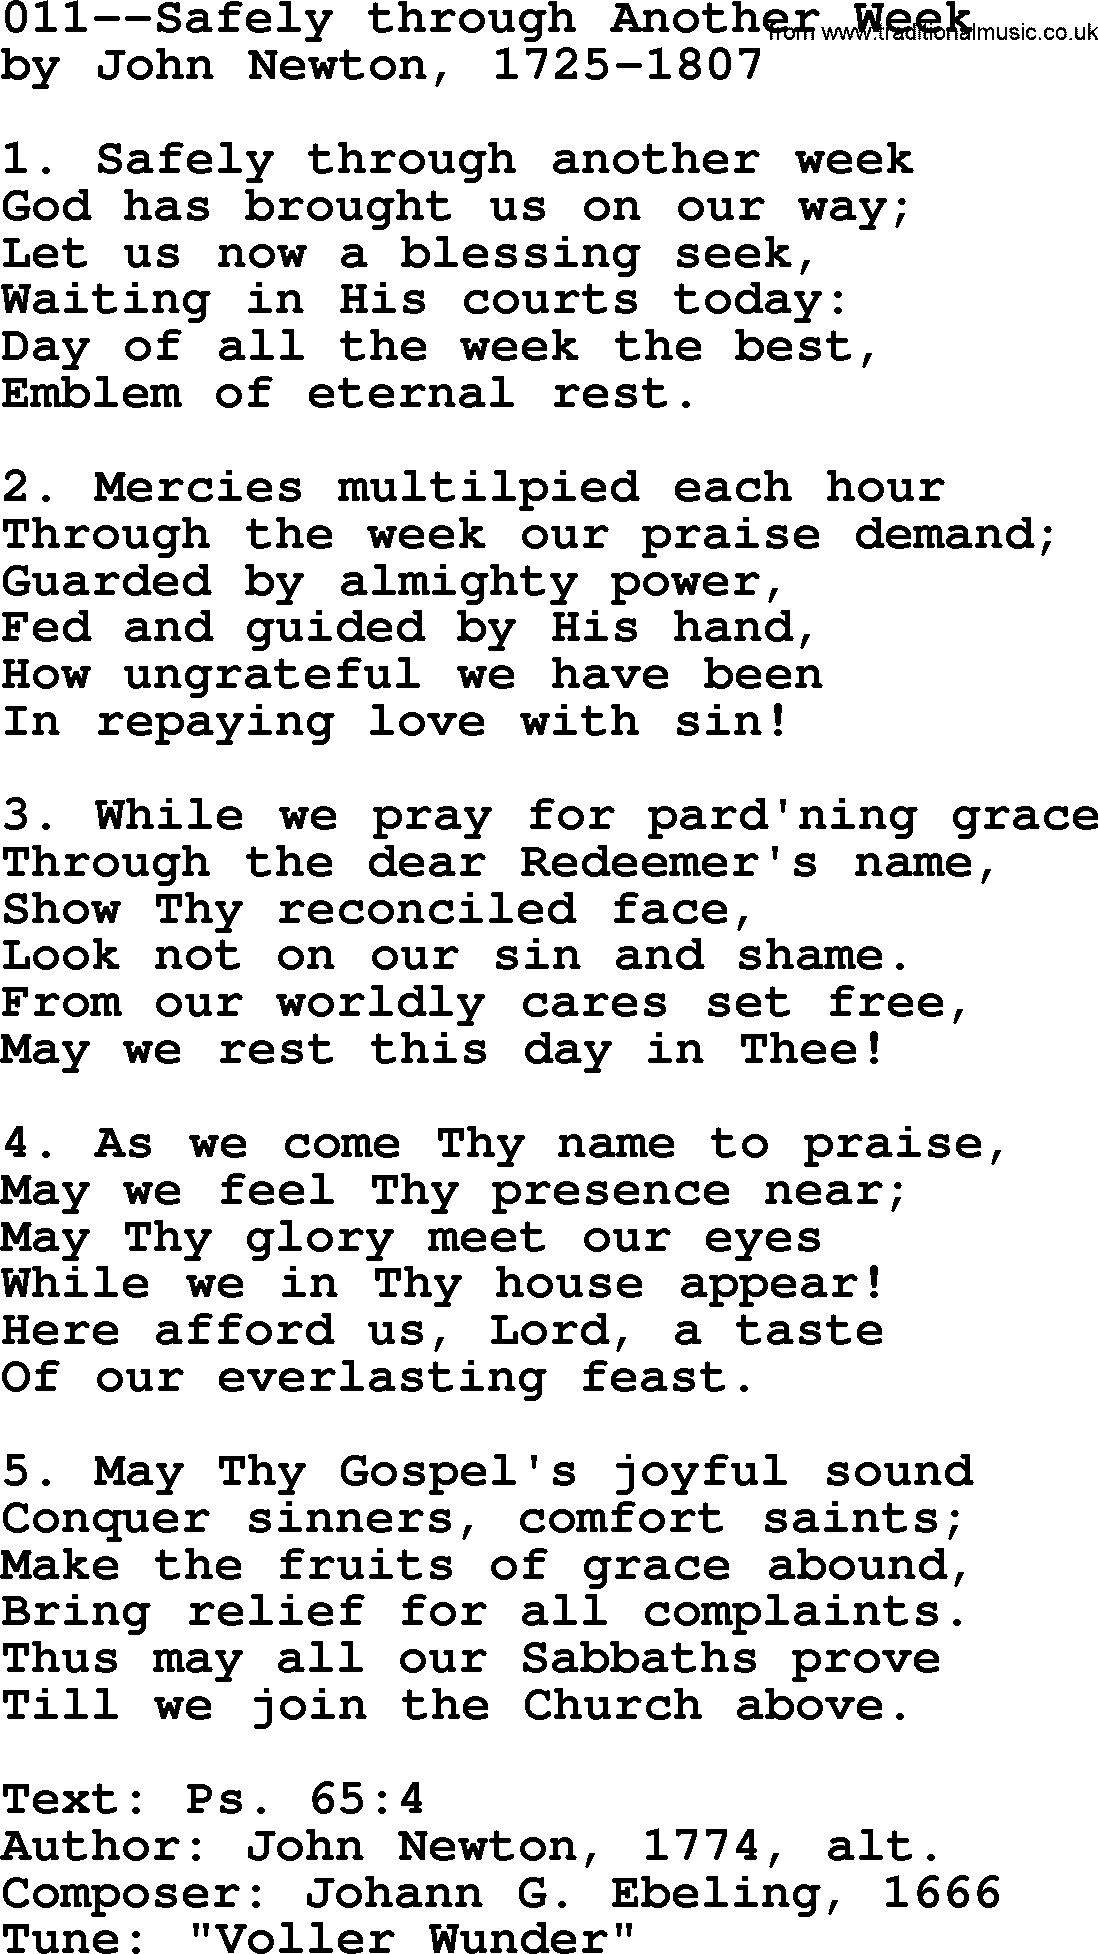 Lutheran Hymn: 011--Safely through Another Week.txt lyrics with PDF